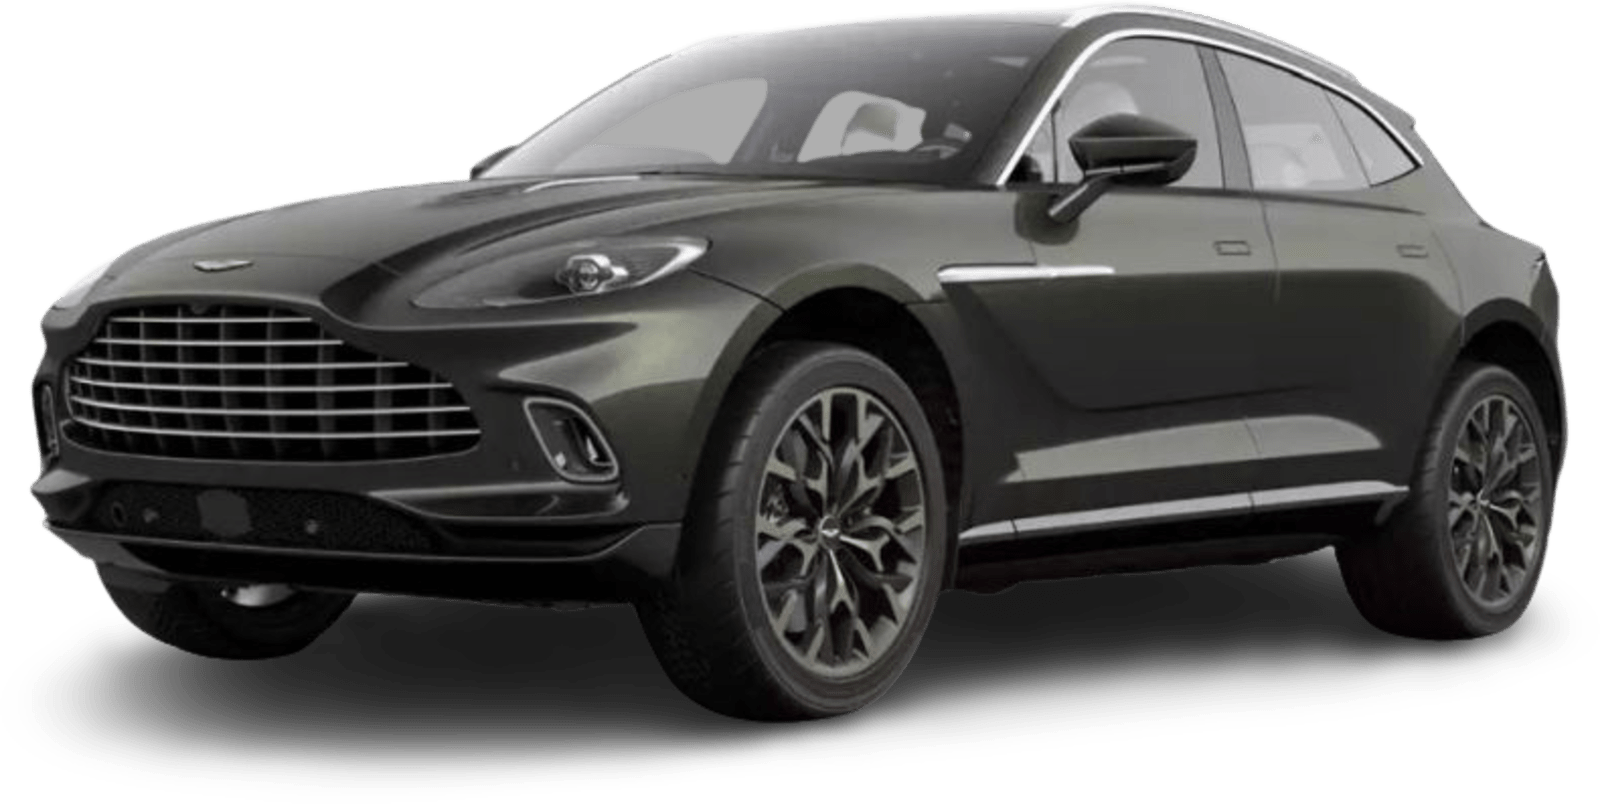 Aston Martin DBX cutout image